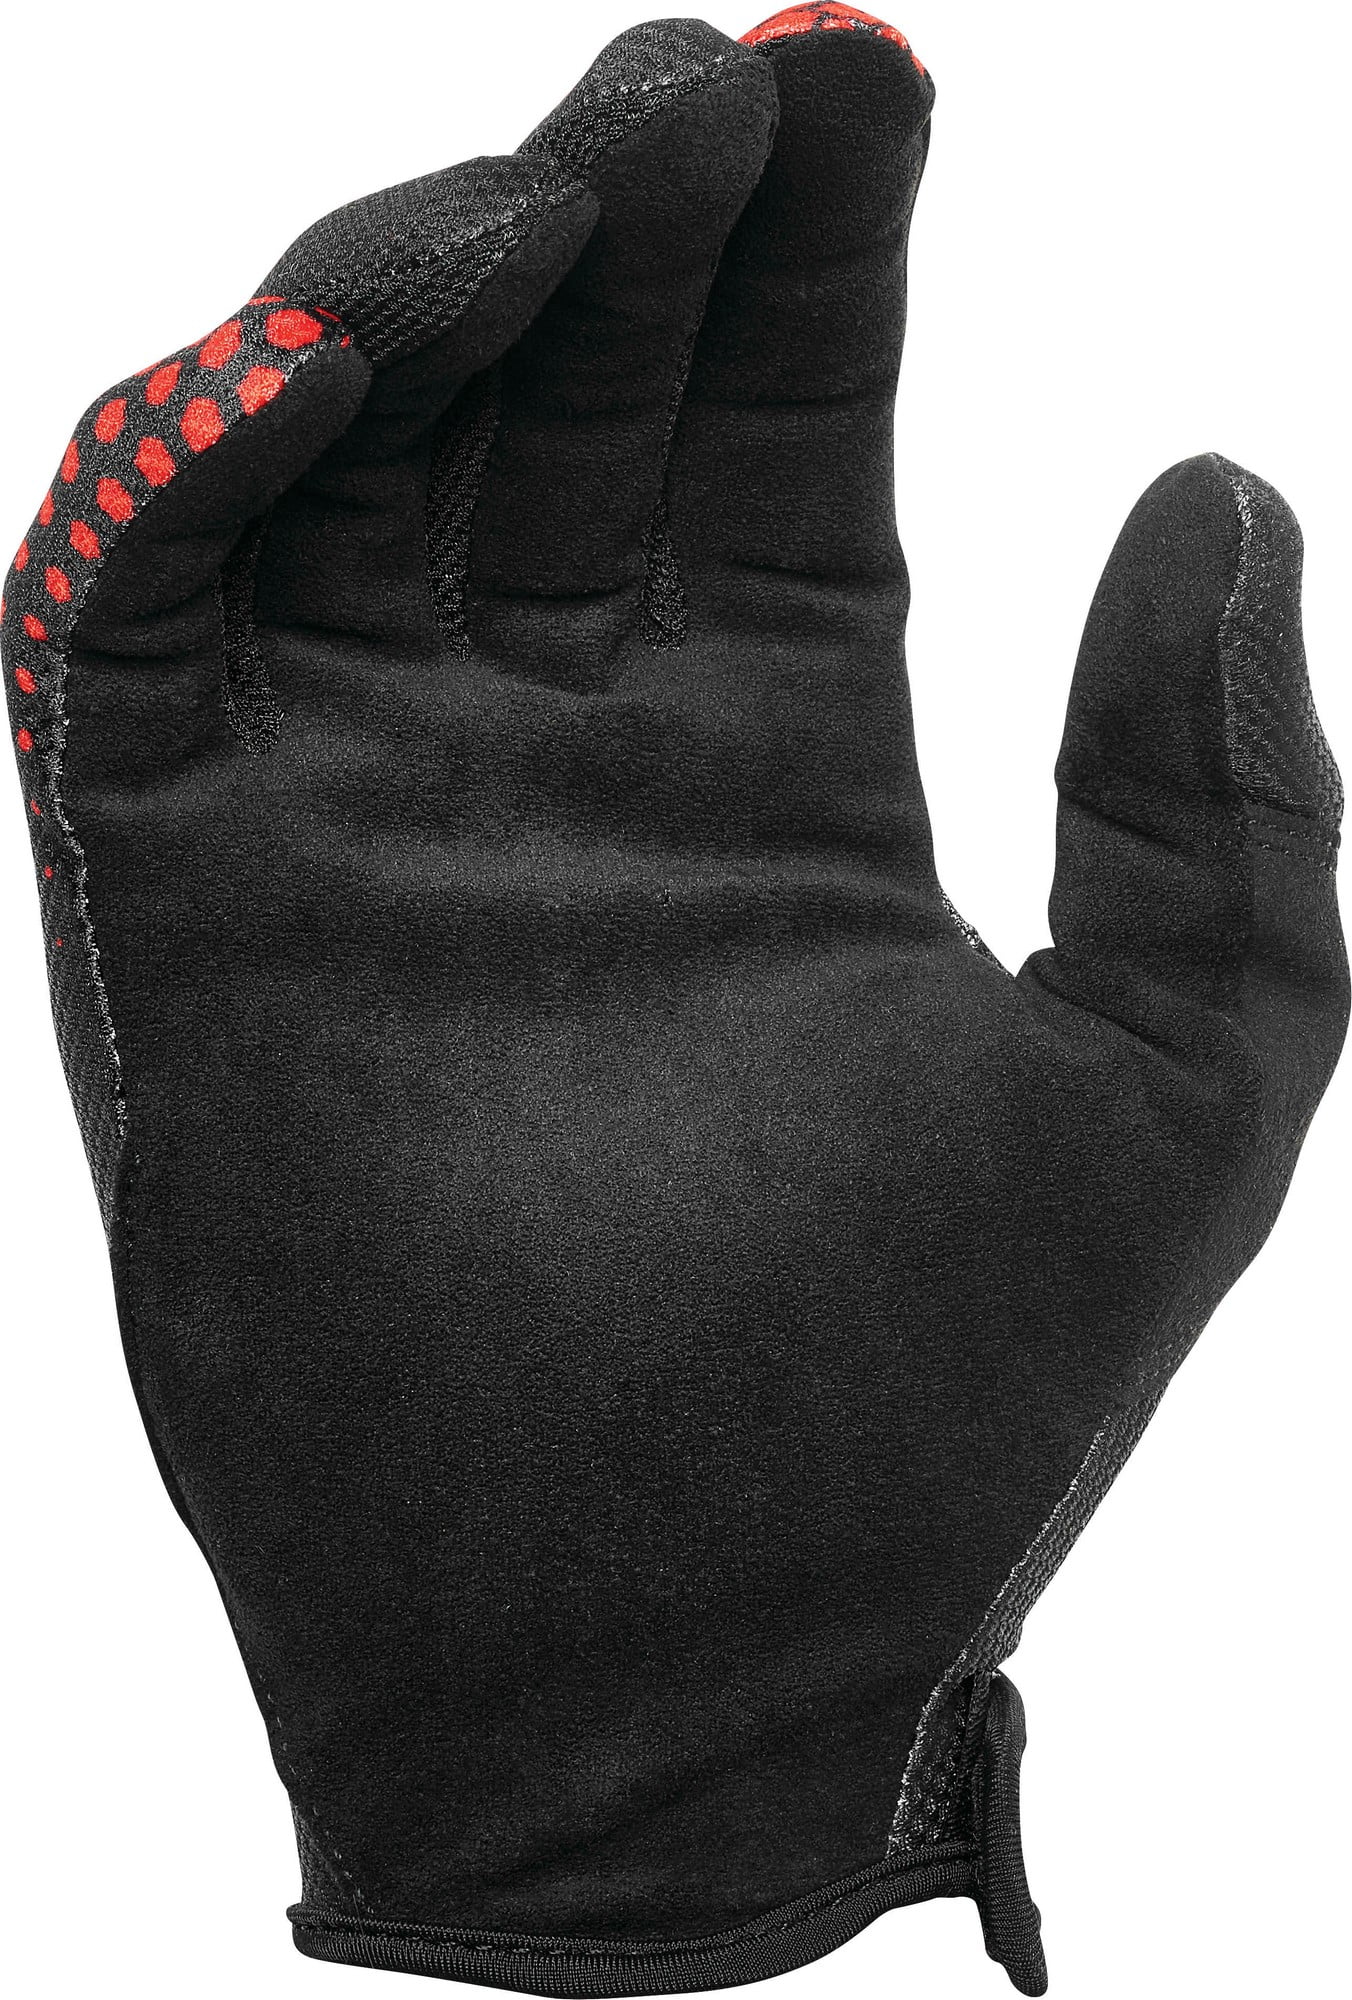 Answer Racing A21 AR1 Swish Men's Off-Road Dirt Bike Motocross Gloves